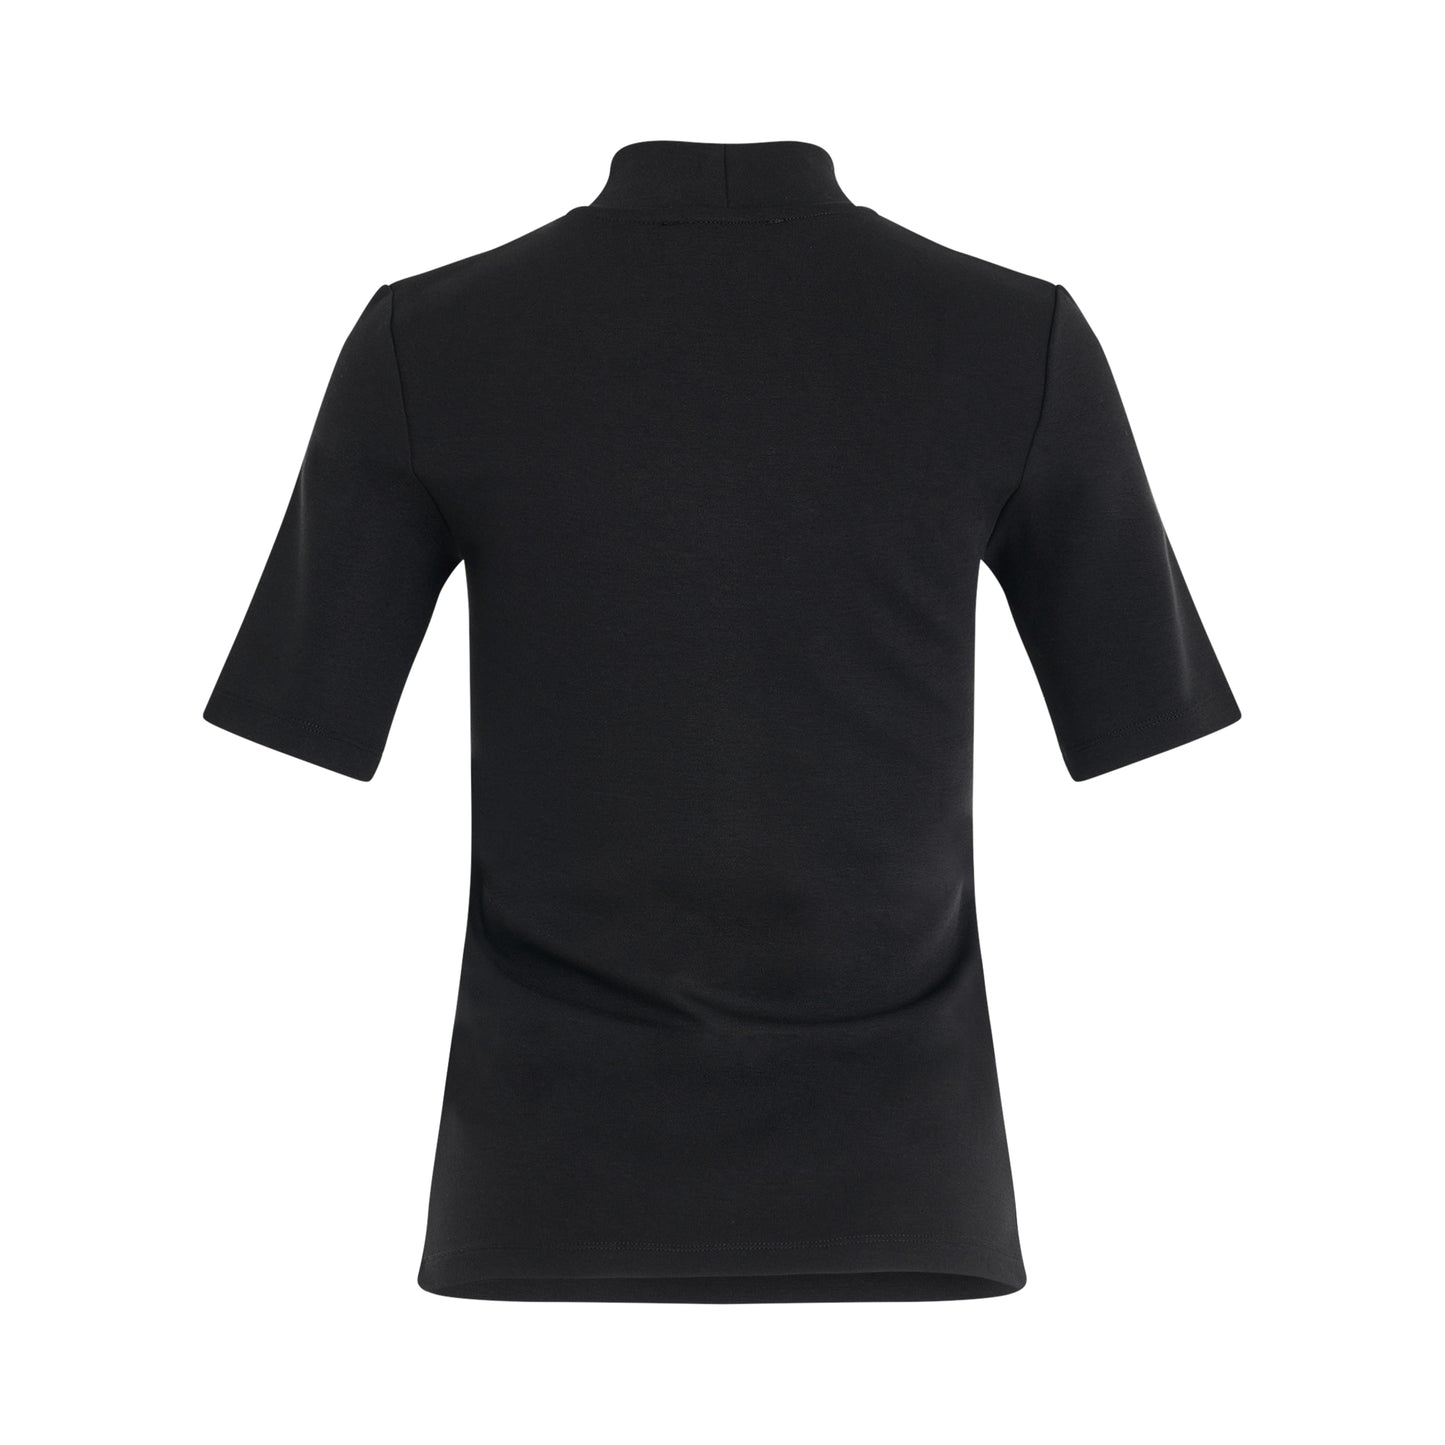 6 Button Raglan Stretch T-Shirt in Black